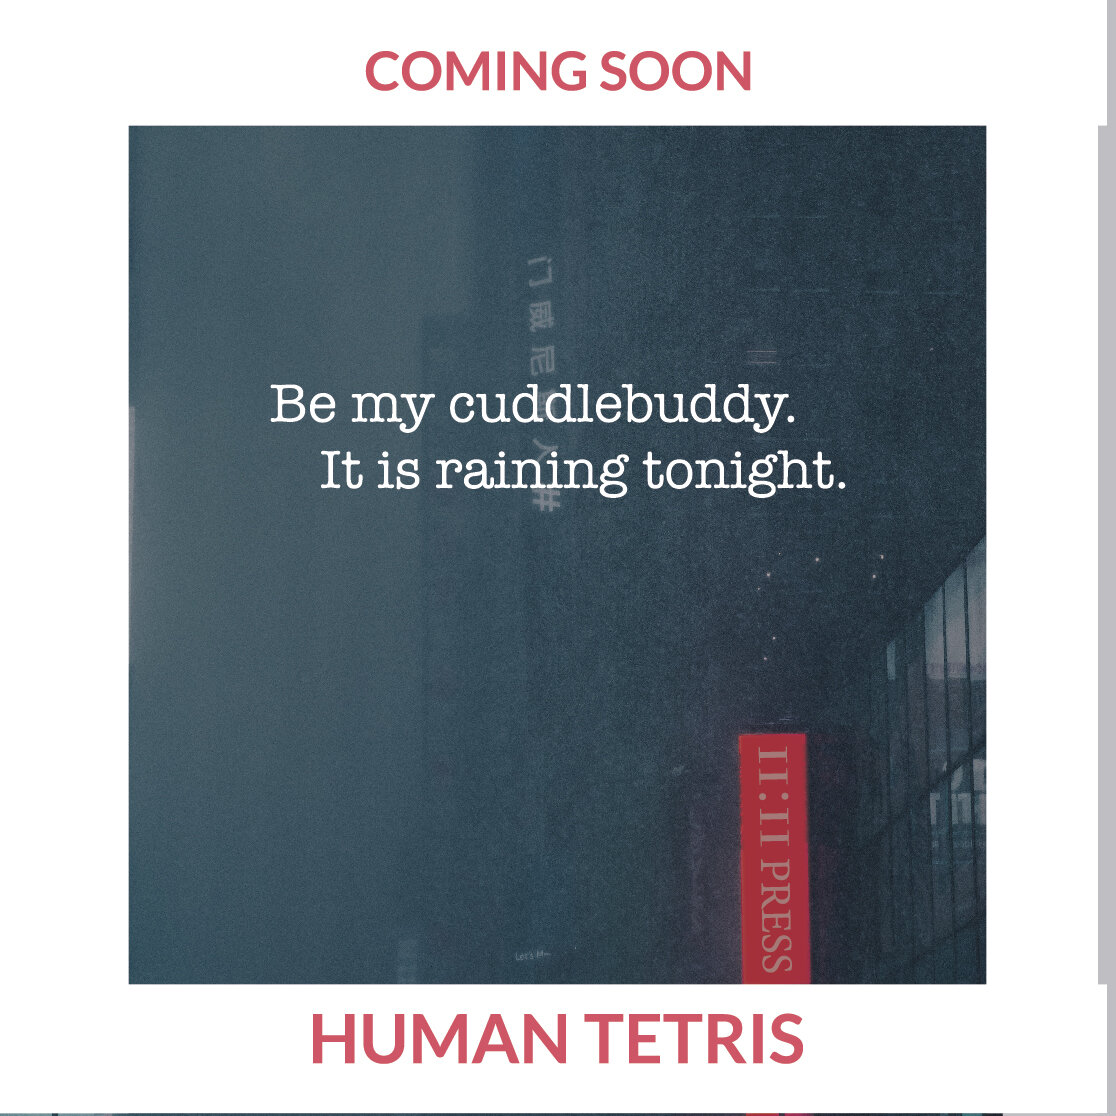 Human Tetris Ads-01.jpg